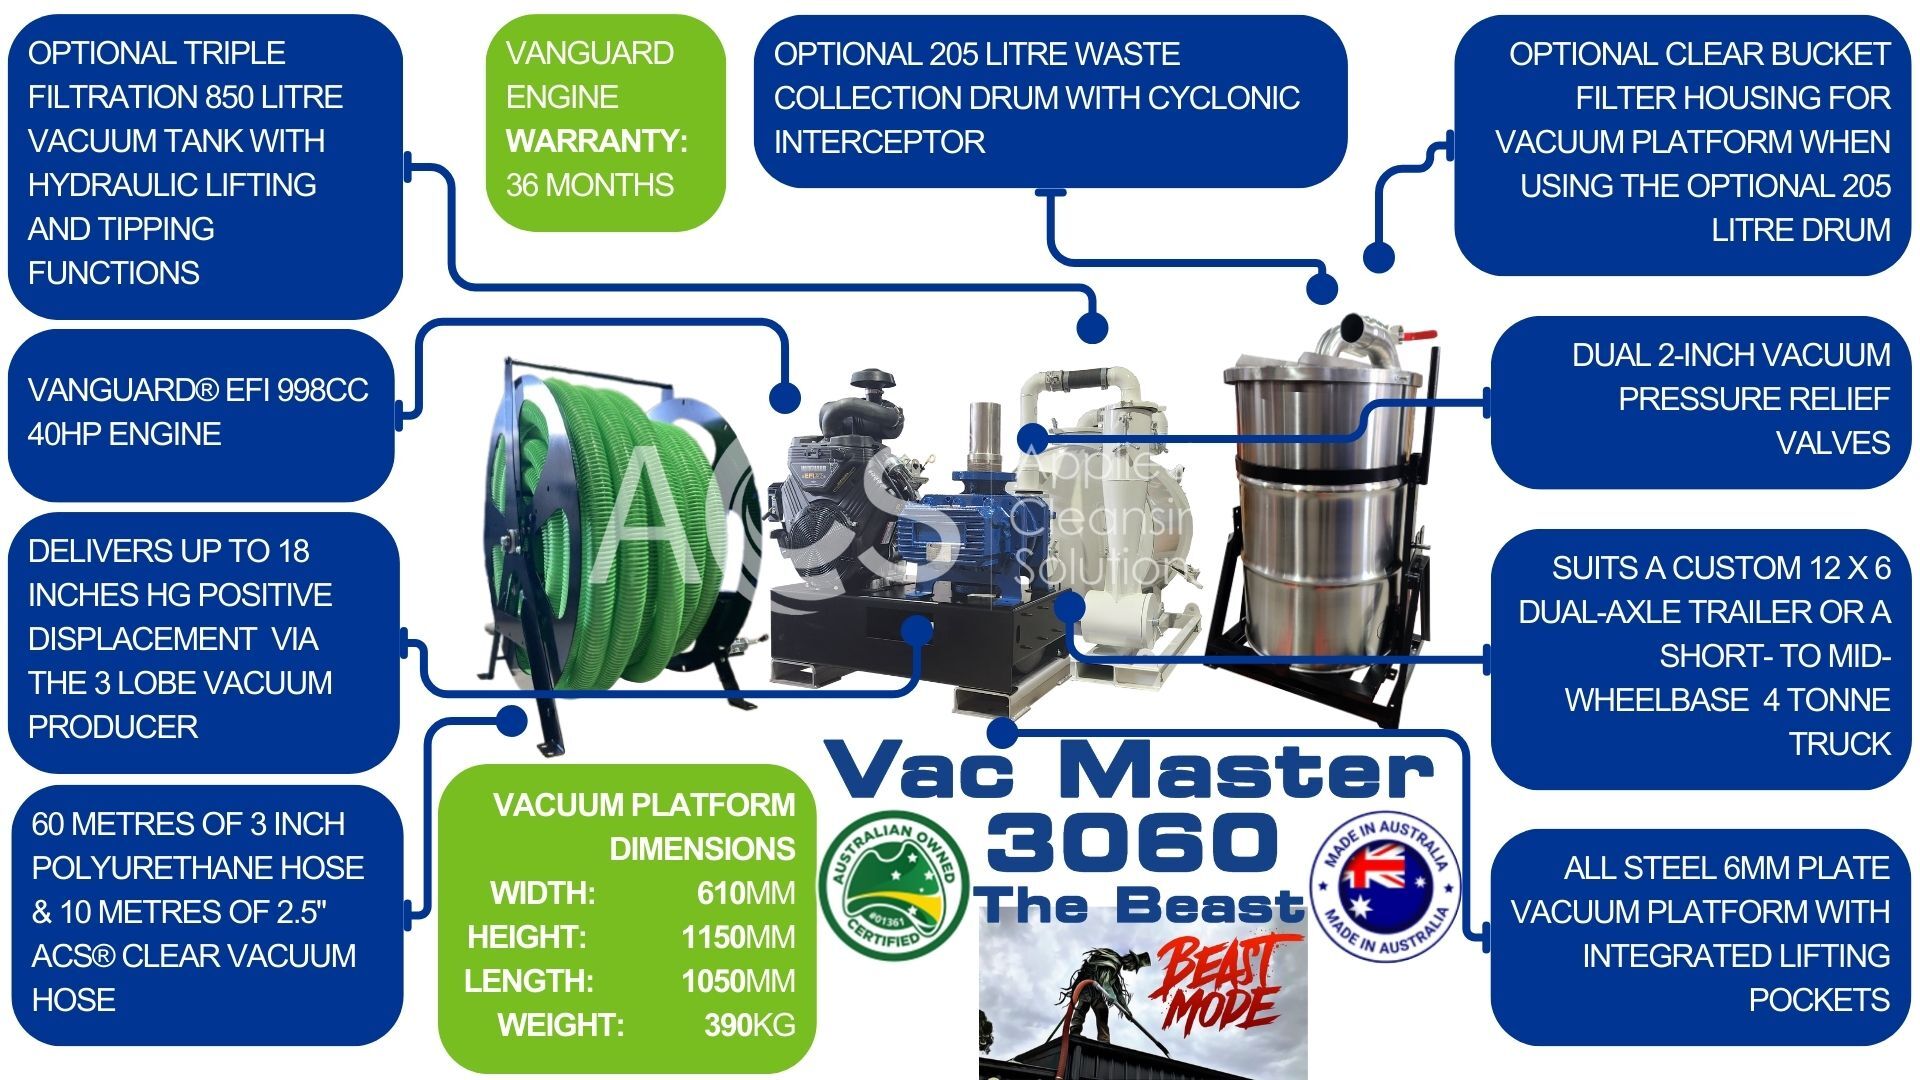 Gutter vacuum System breakdown of Vac Master 3060